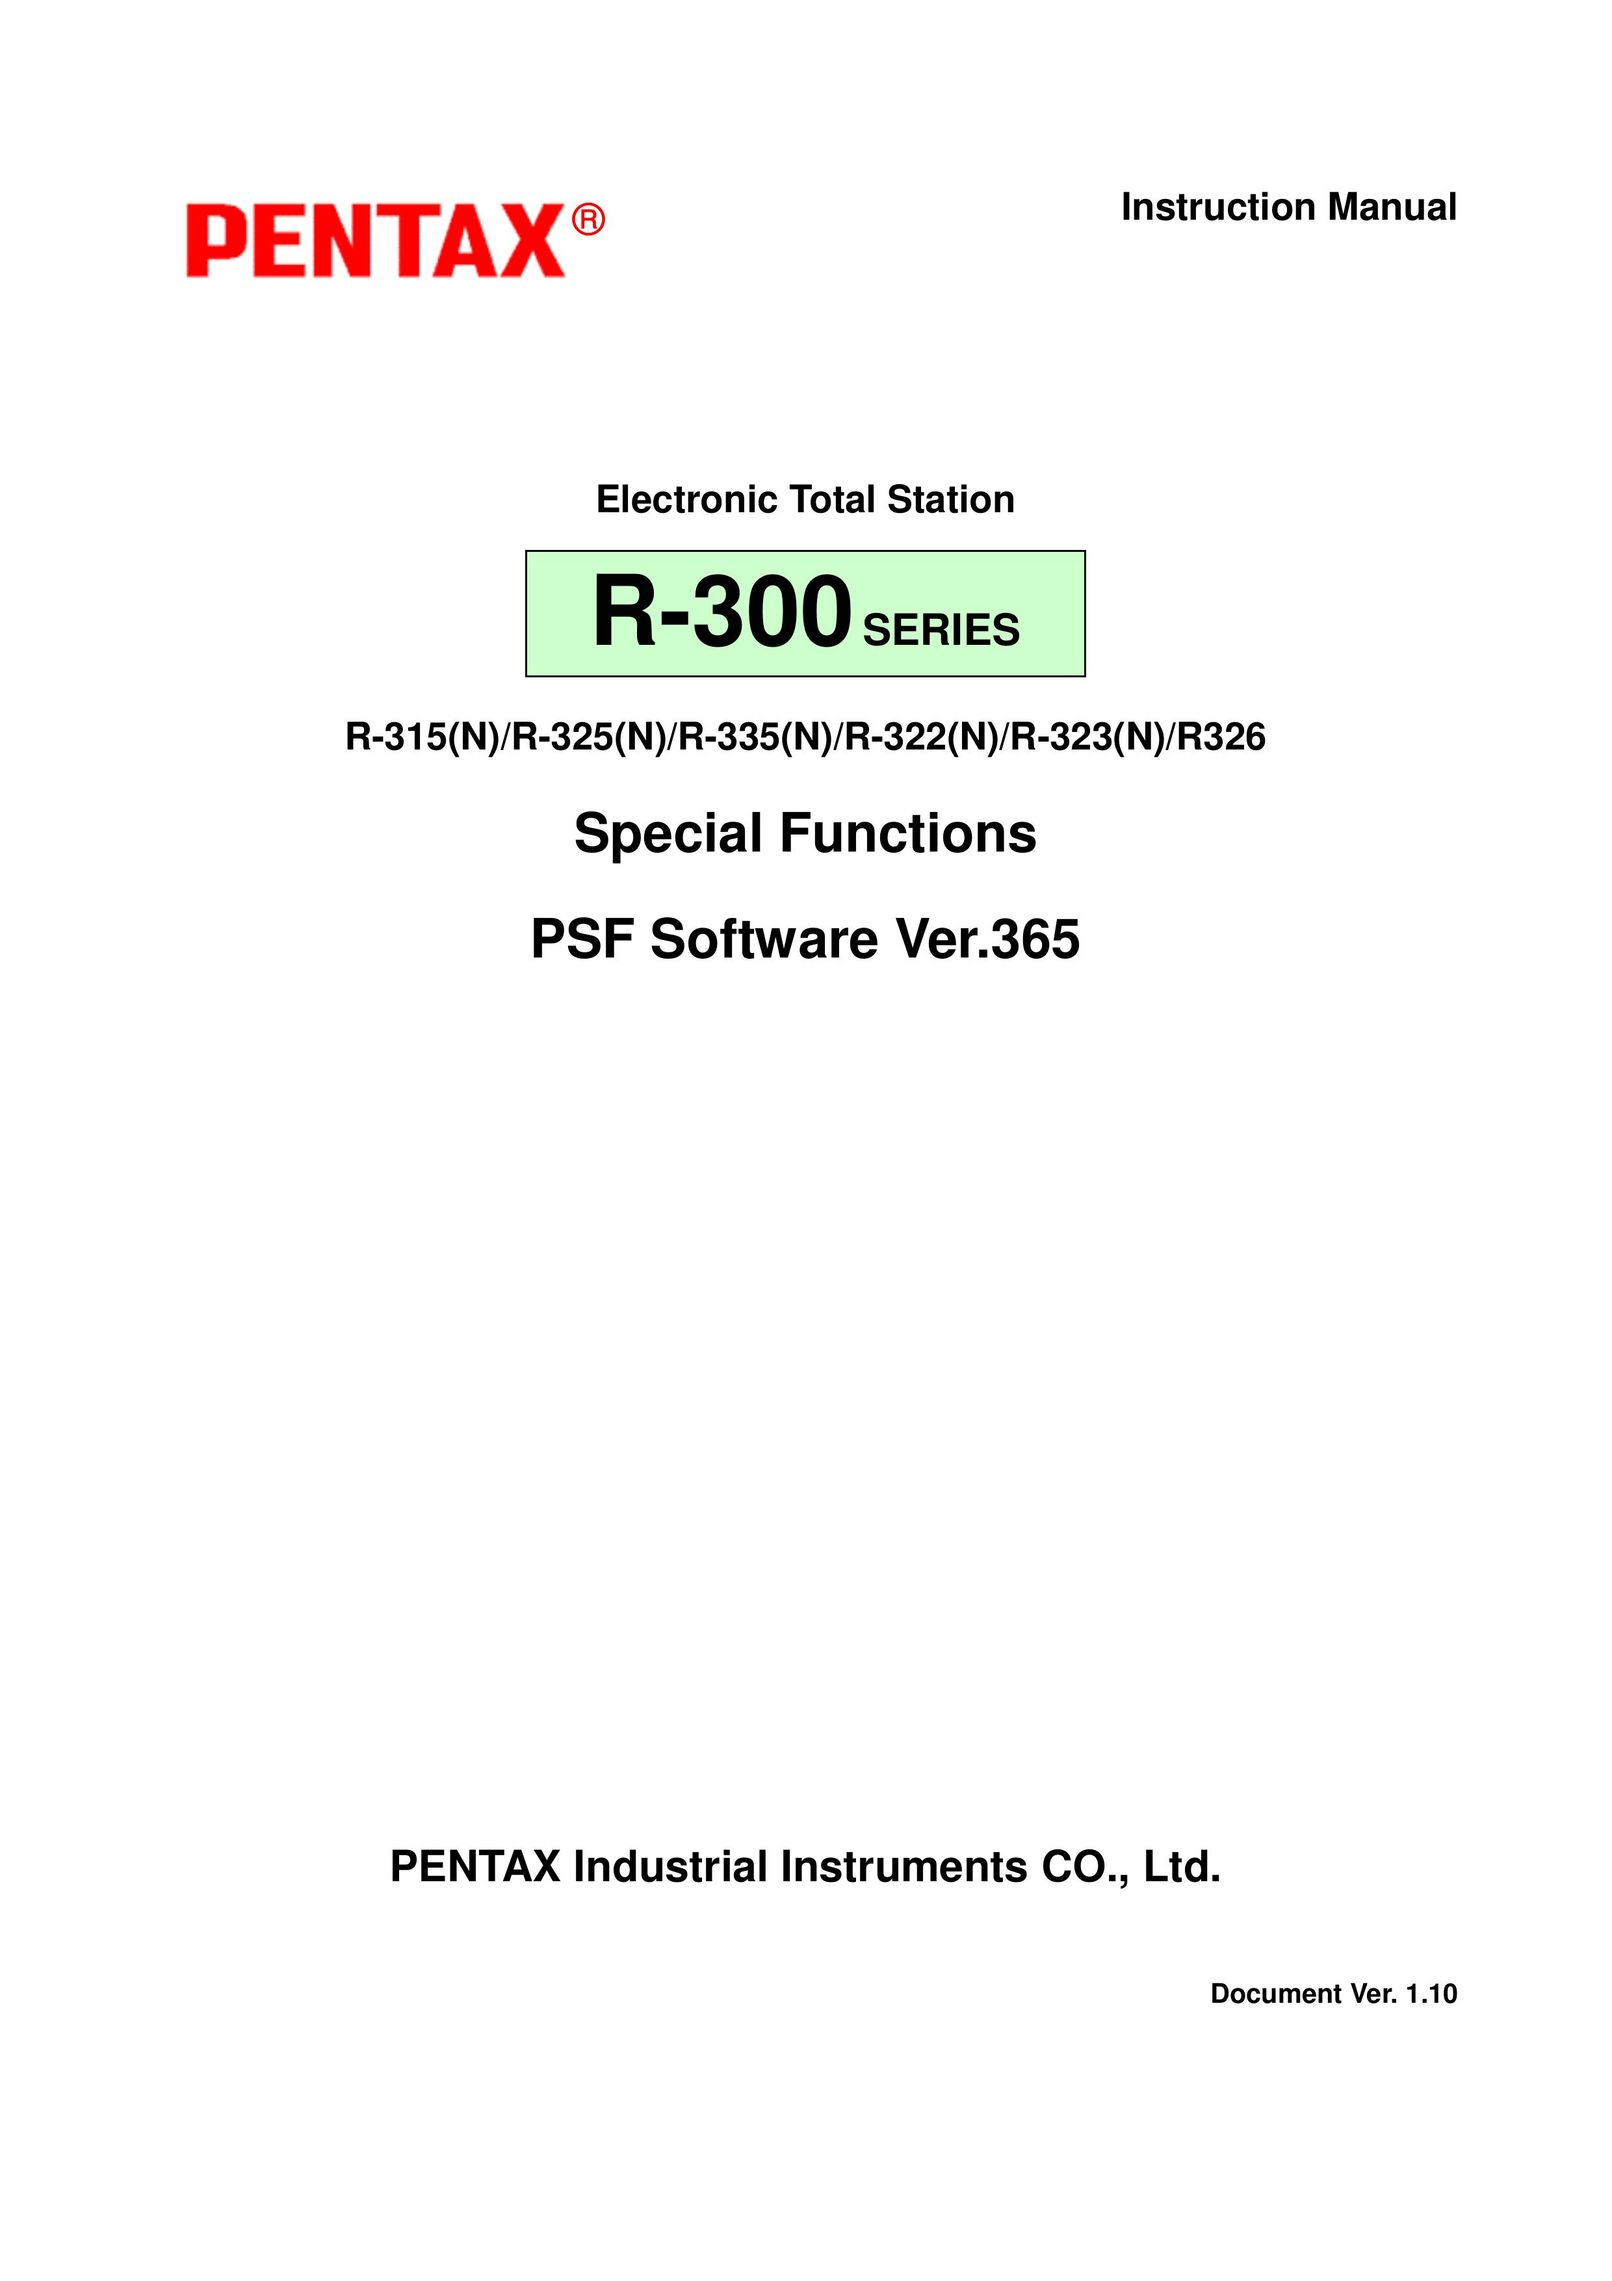 Pentax R-325(N) Home Gym User Manual